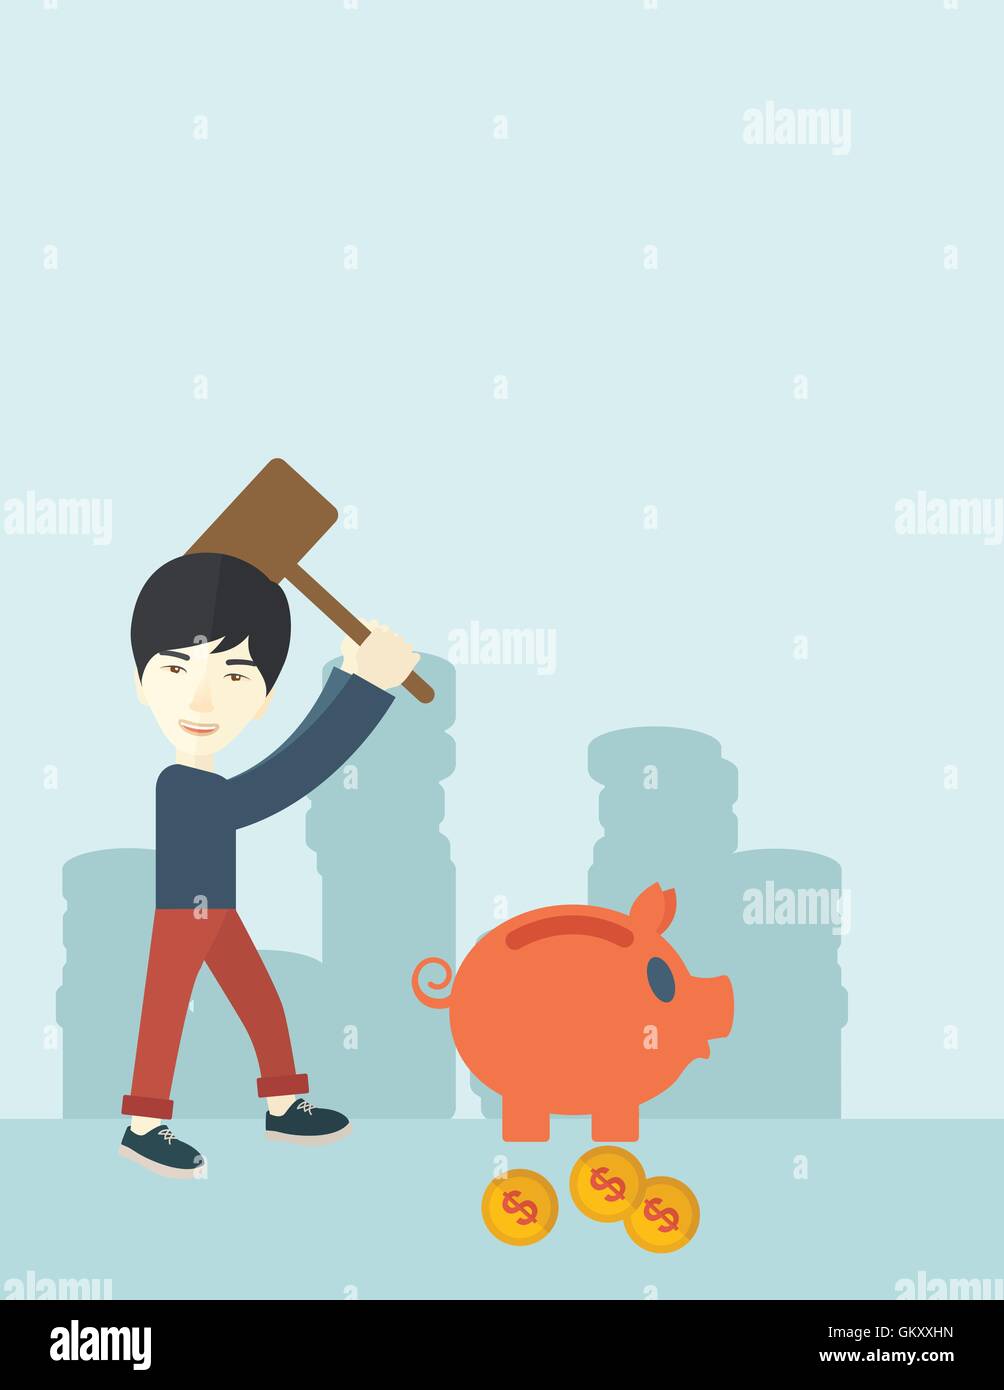 Chinese guy holding a hammer breaking piggy bank. Illustration de Vecteur